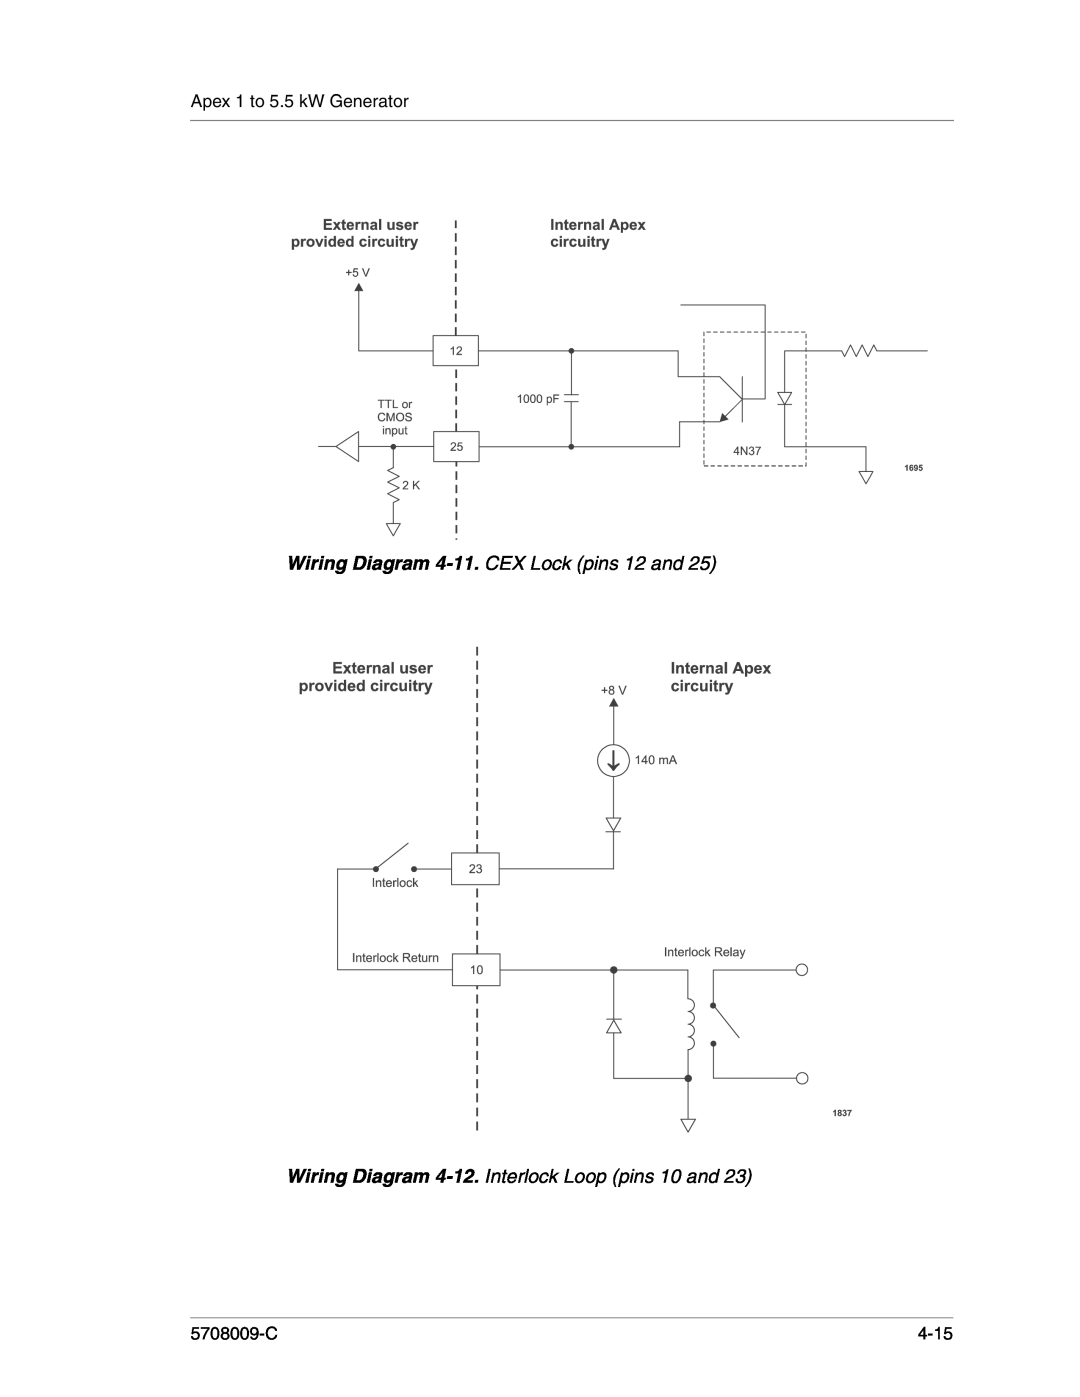 Apex Digital 5708009-C Wiring Diagram 4-11. CEX Lock pins 12 and, Wiring Diagram 4-12. Interlock Loop pins 10 and, 4-15 